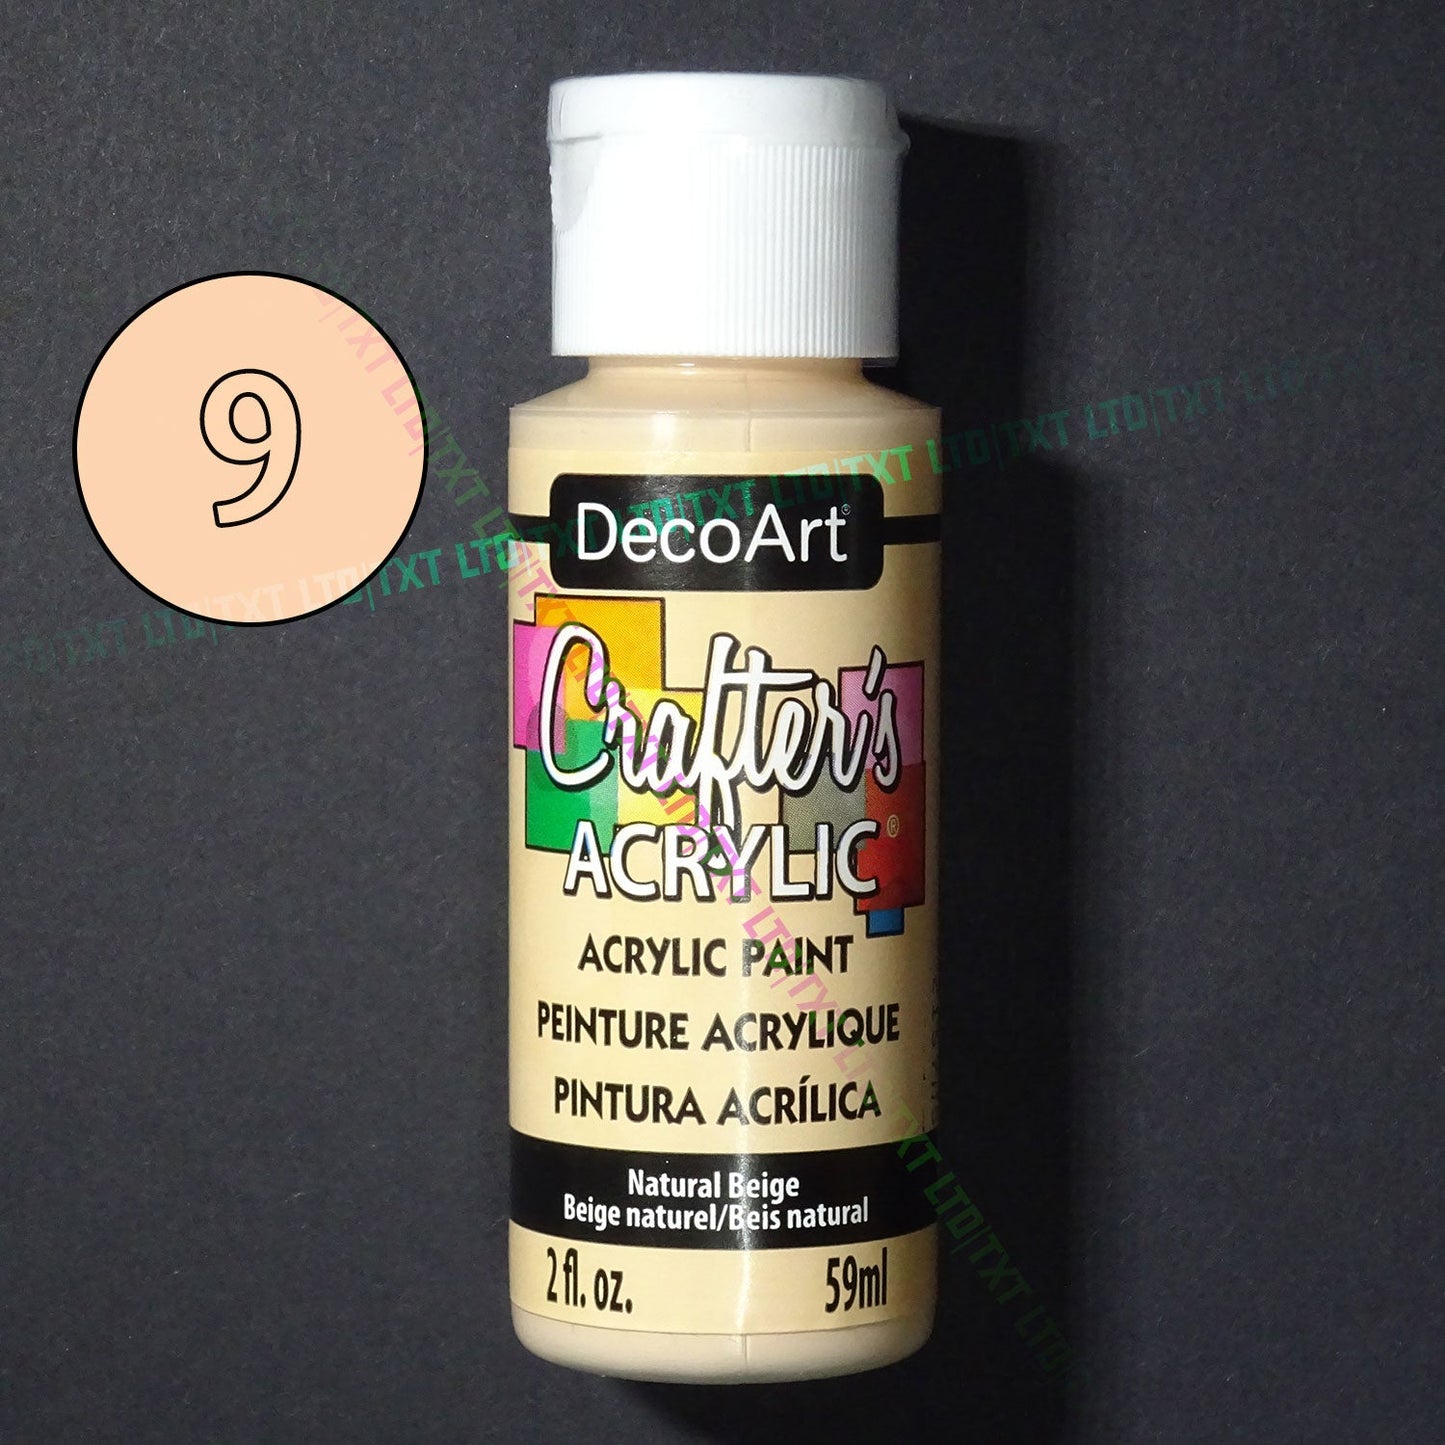 DecoArt Crafters Acryl, 59ml/2oz. [Farben 1 bis 103]